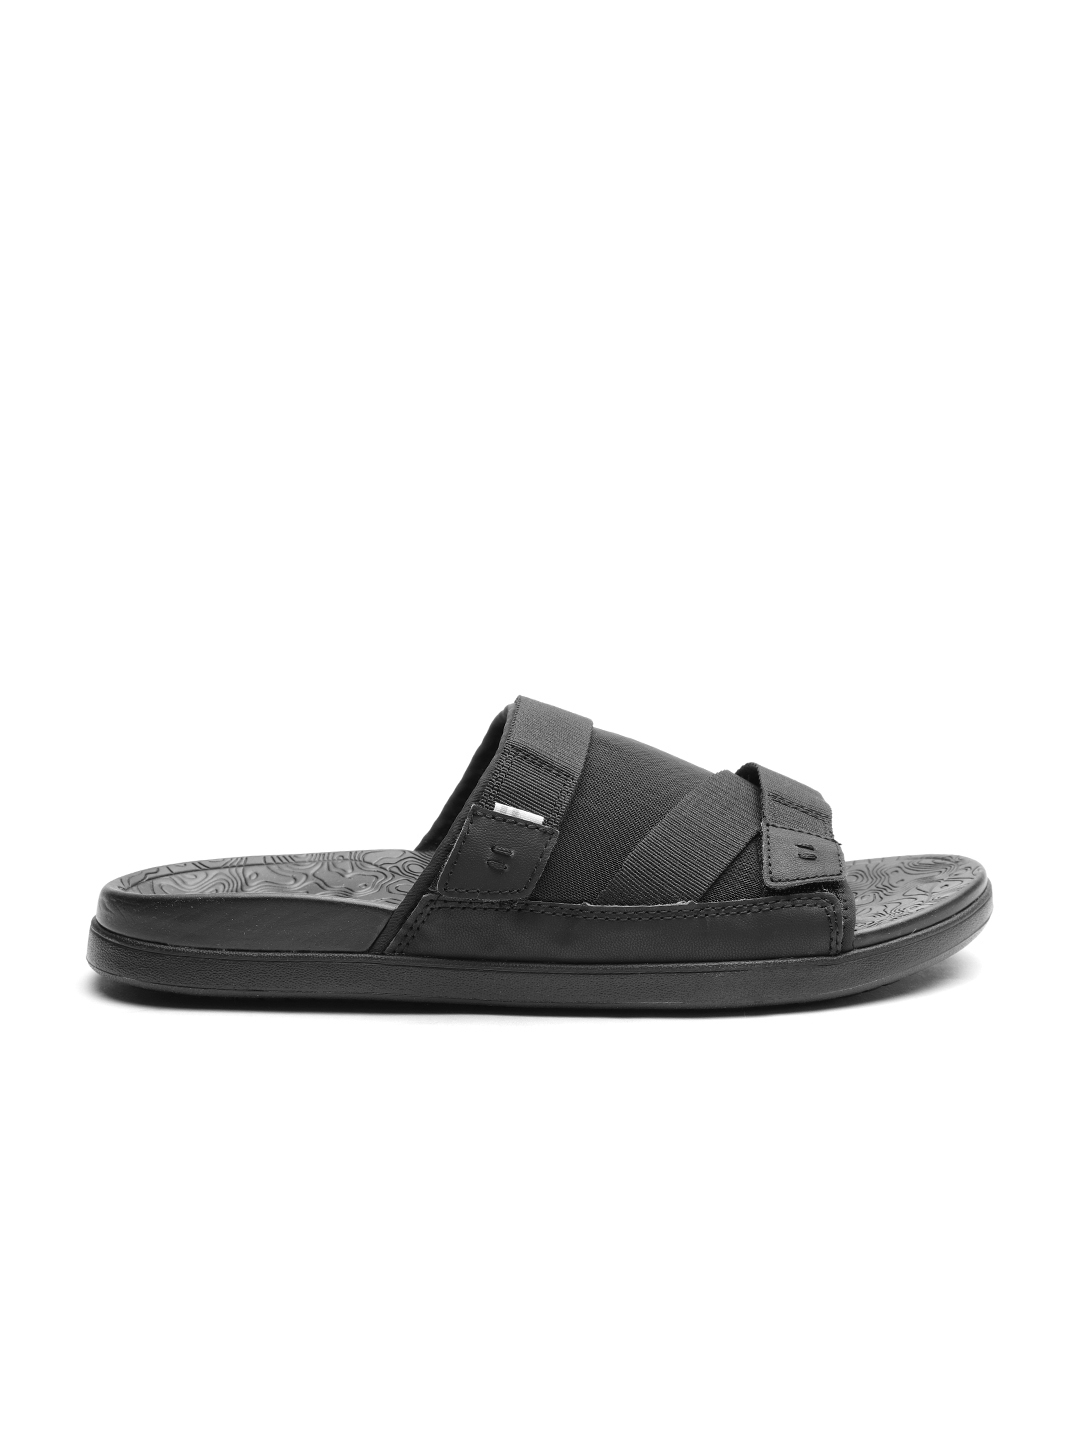 TOMS Rubber Sandals for Men | Mercari